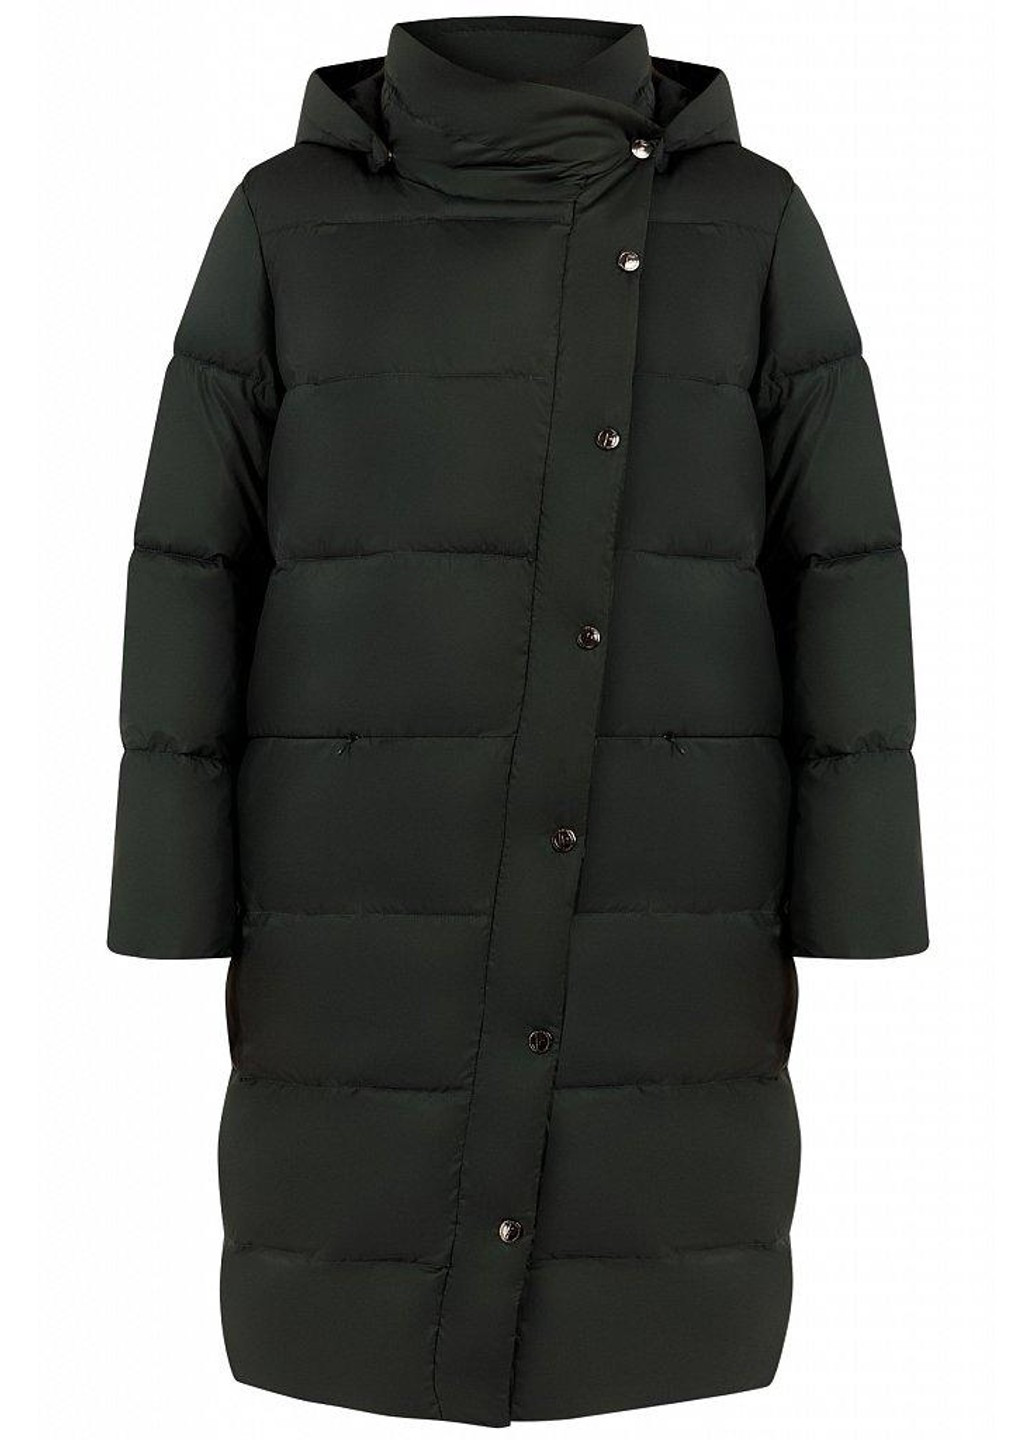 Зеленая зимняя зимняя куртка w19-11021-524 Finn Flare